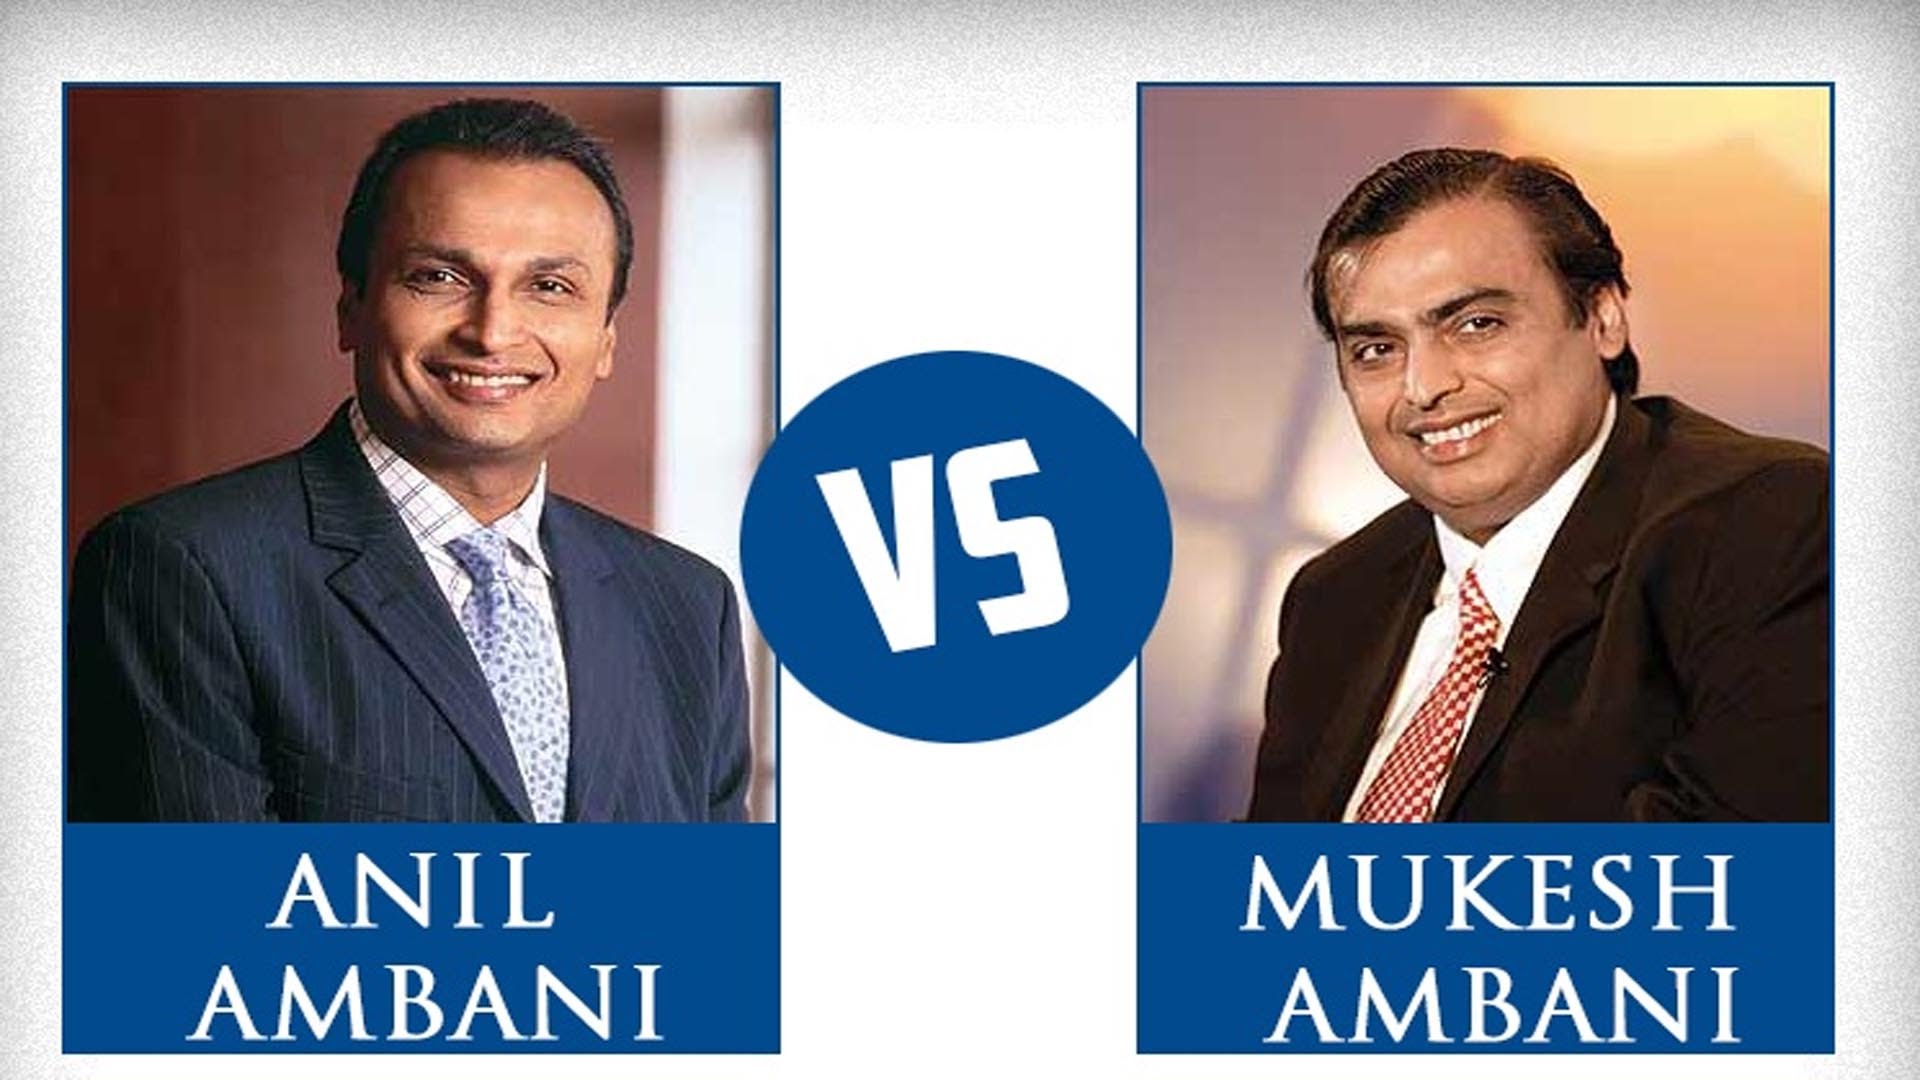 The $41 billion wealth gap that divides Mukesh and Anil Ambani